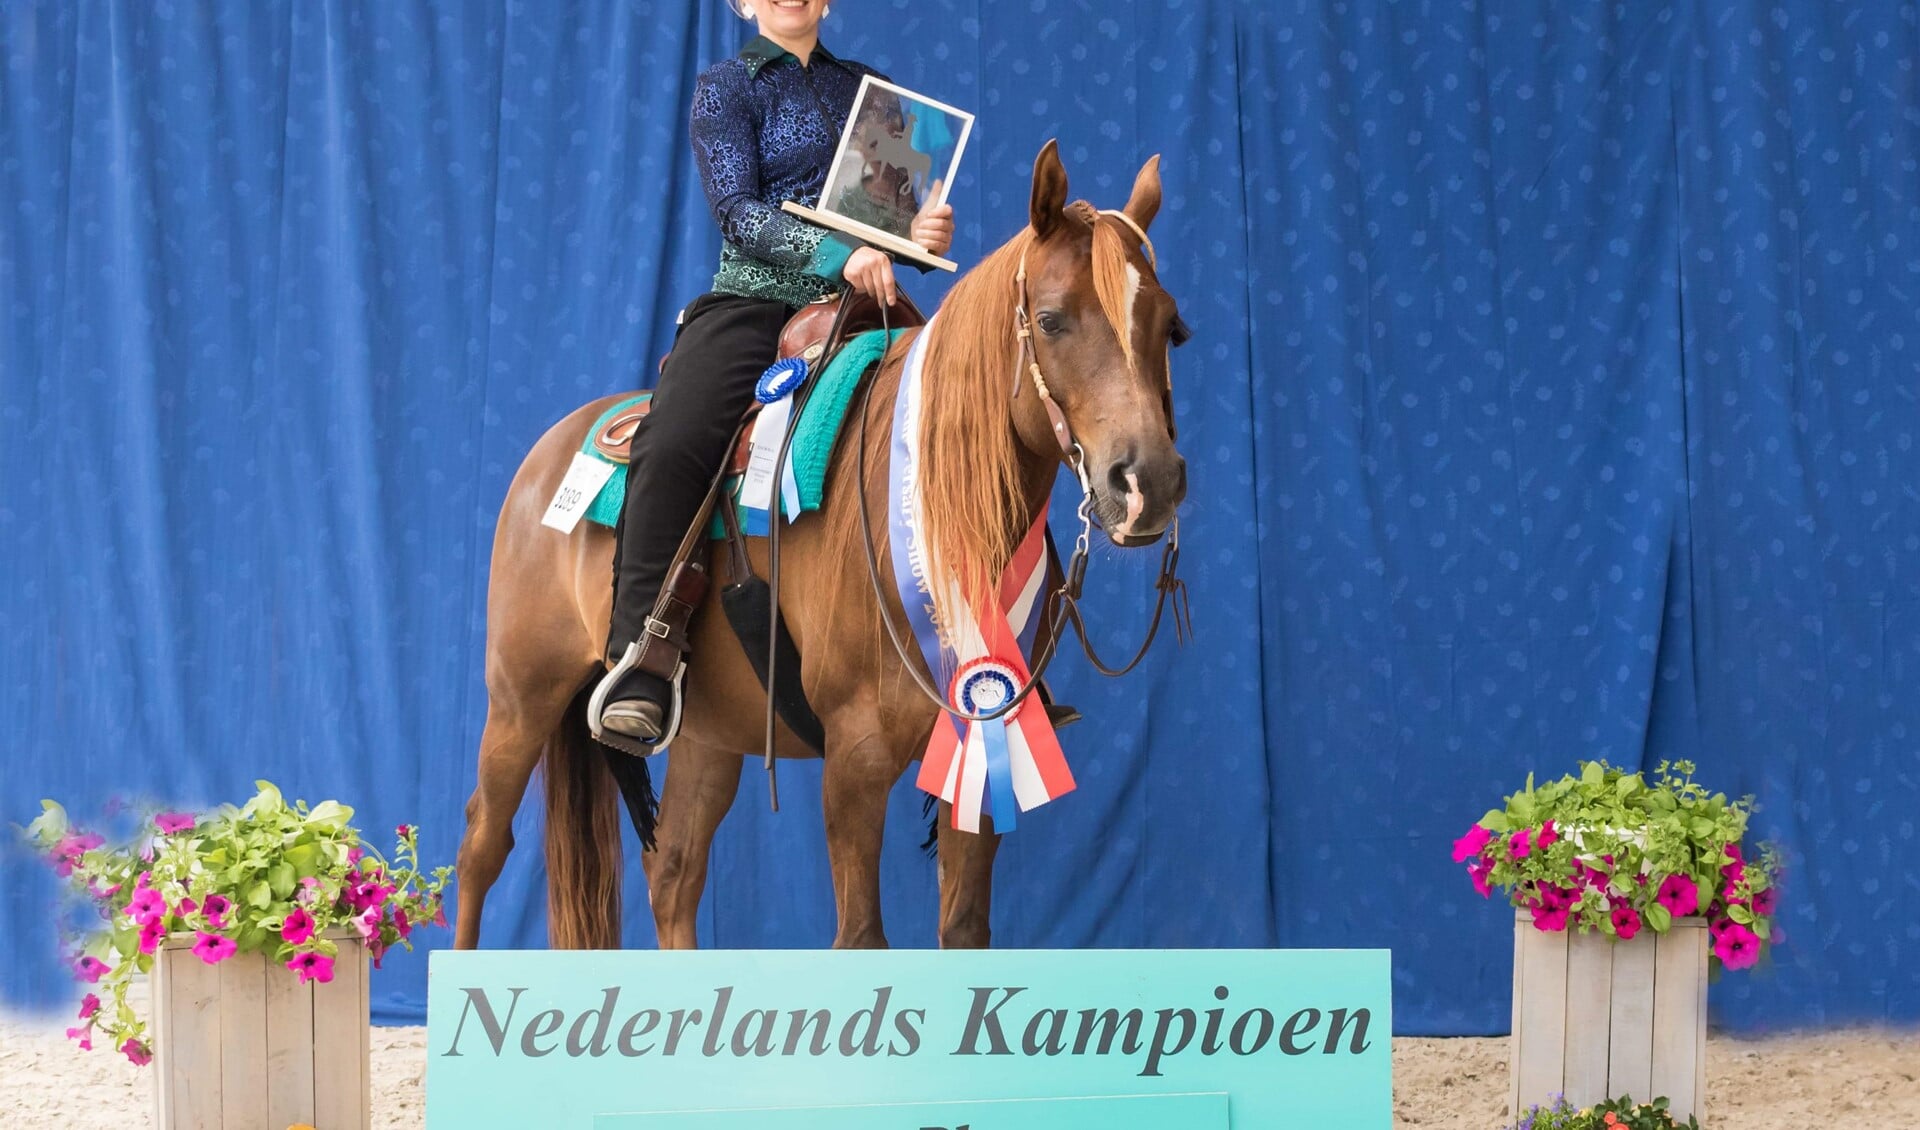 De Brielse amazone Canisia Romani is western riding kampioene van Nederland 2018 .